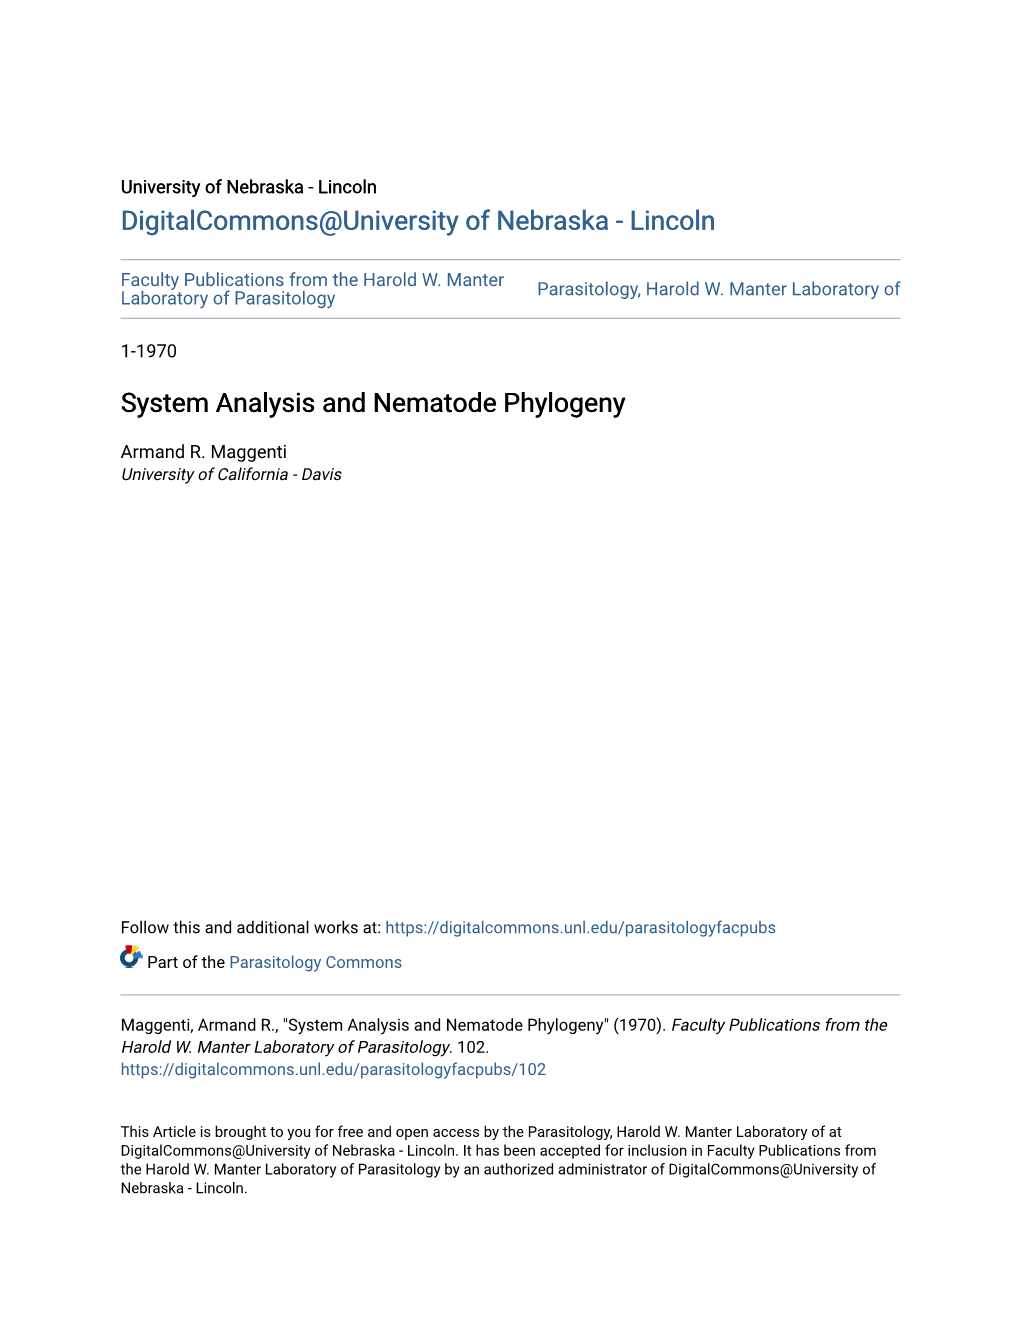 System Analysis and Nematode Phylogeny